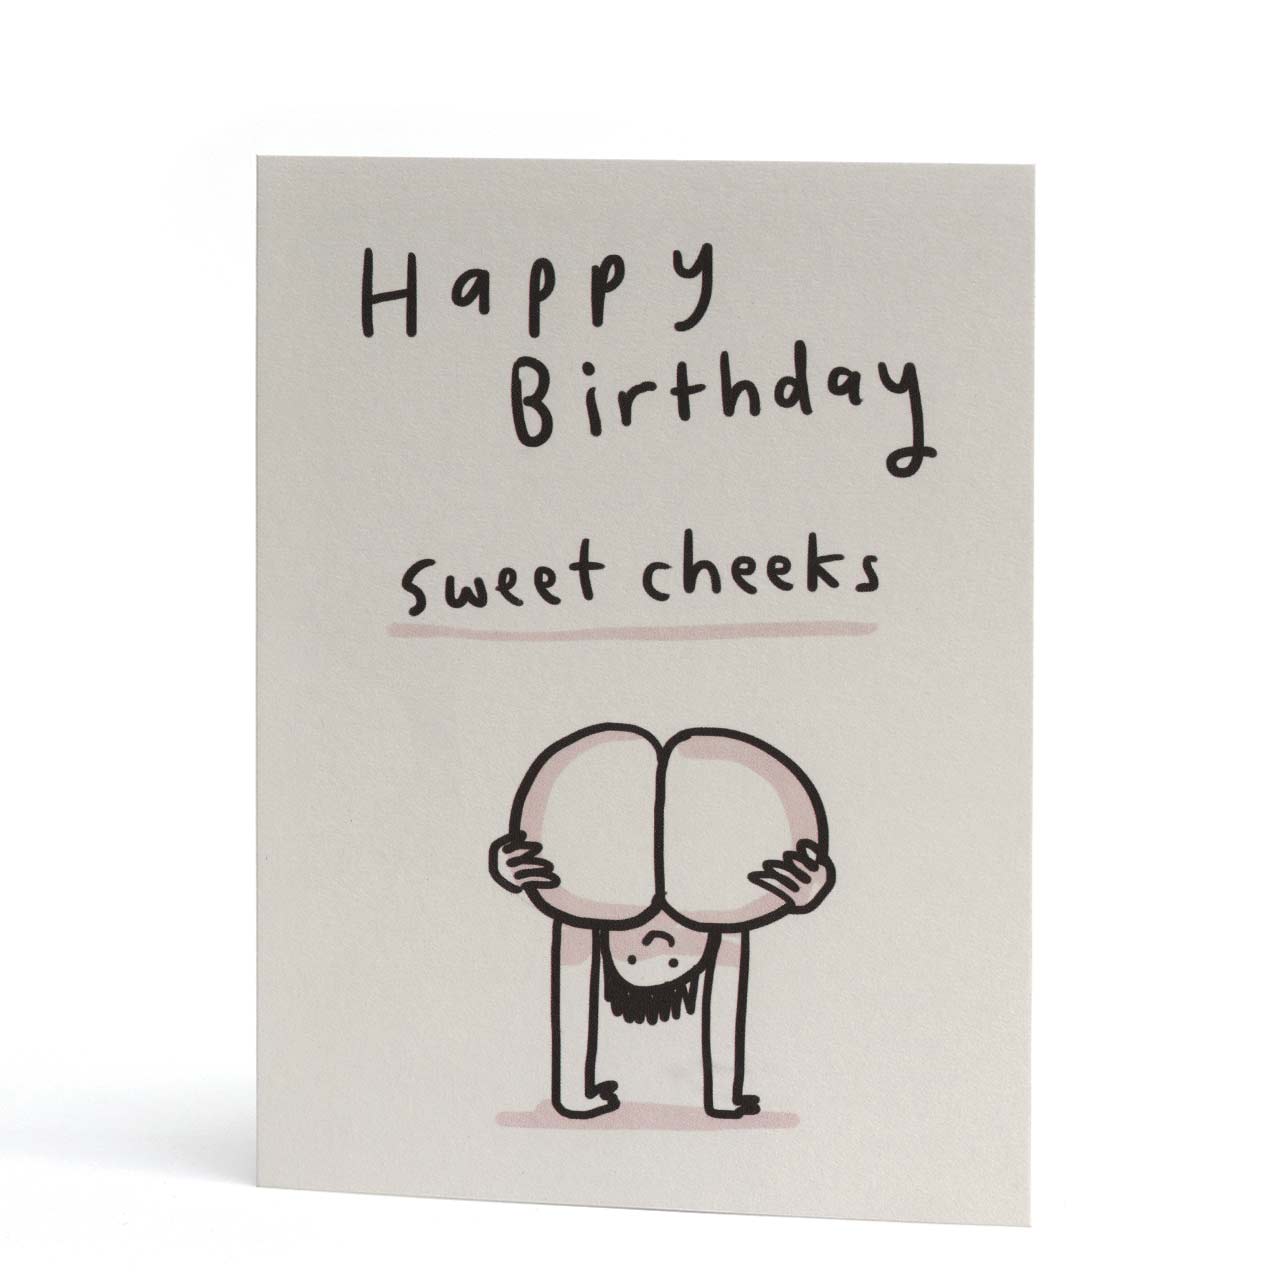 Happy Birthday Sweet Cheeks Greeting Card